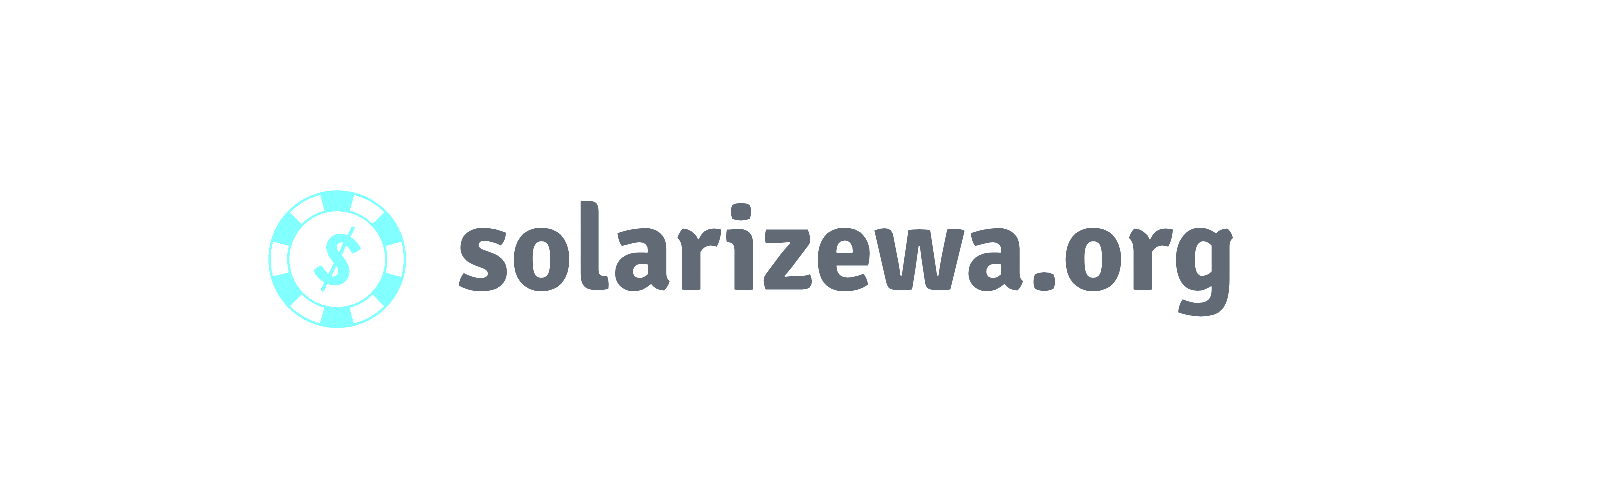 solarizewa.org